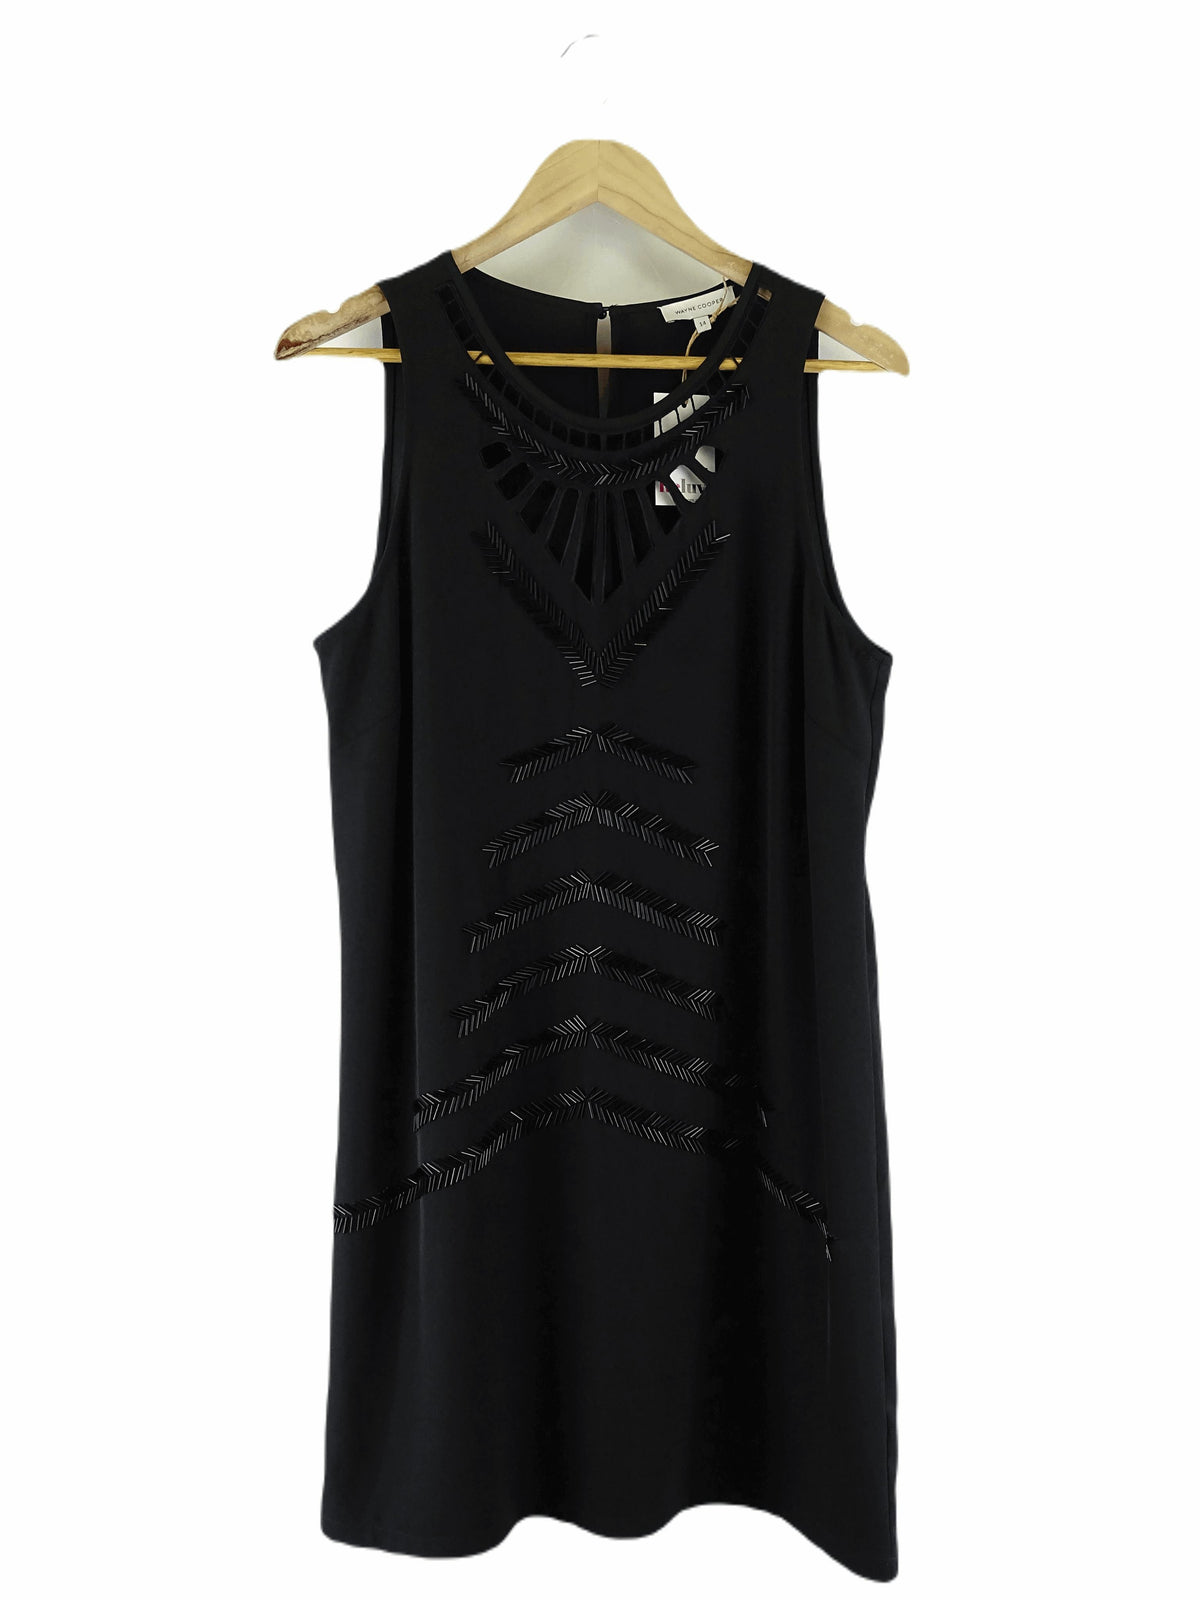 Wayne Cooper Black Sequin Sleeveless Dress 14